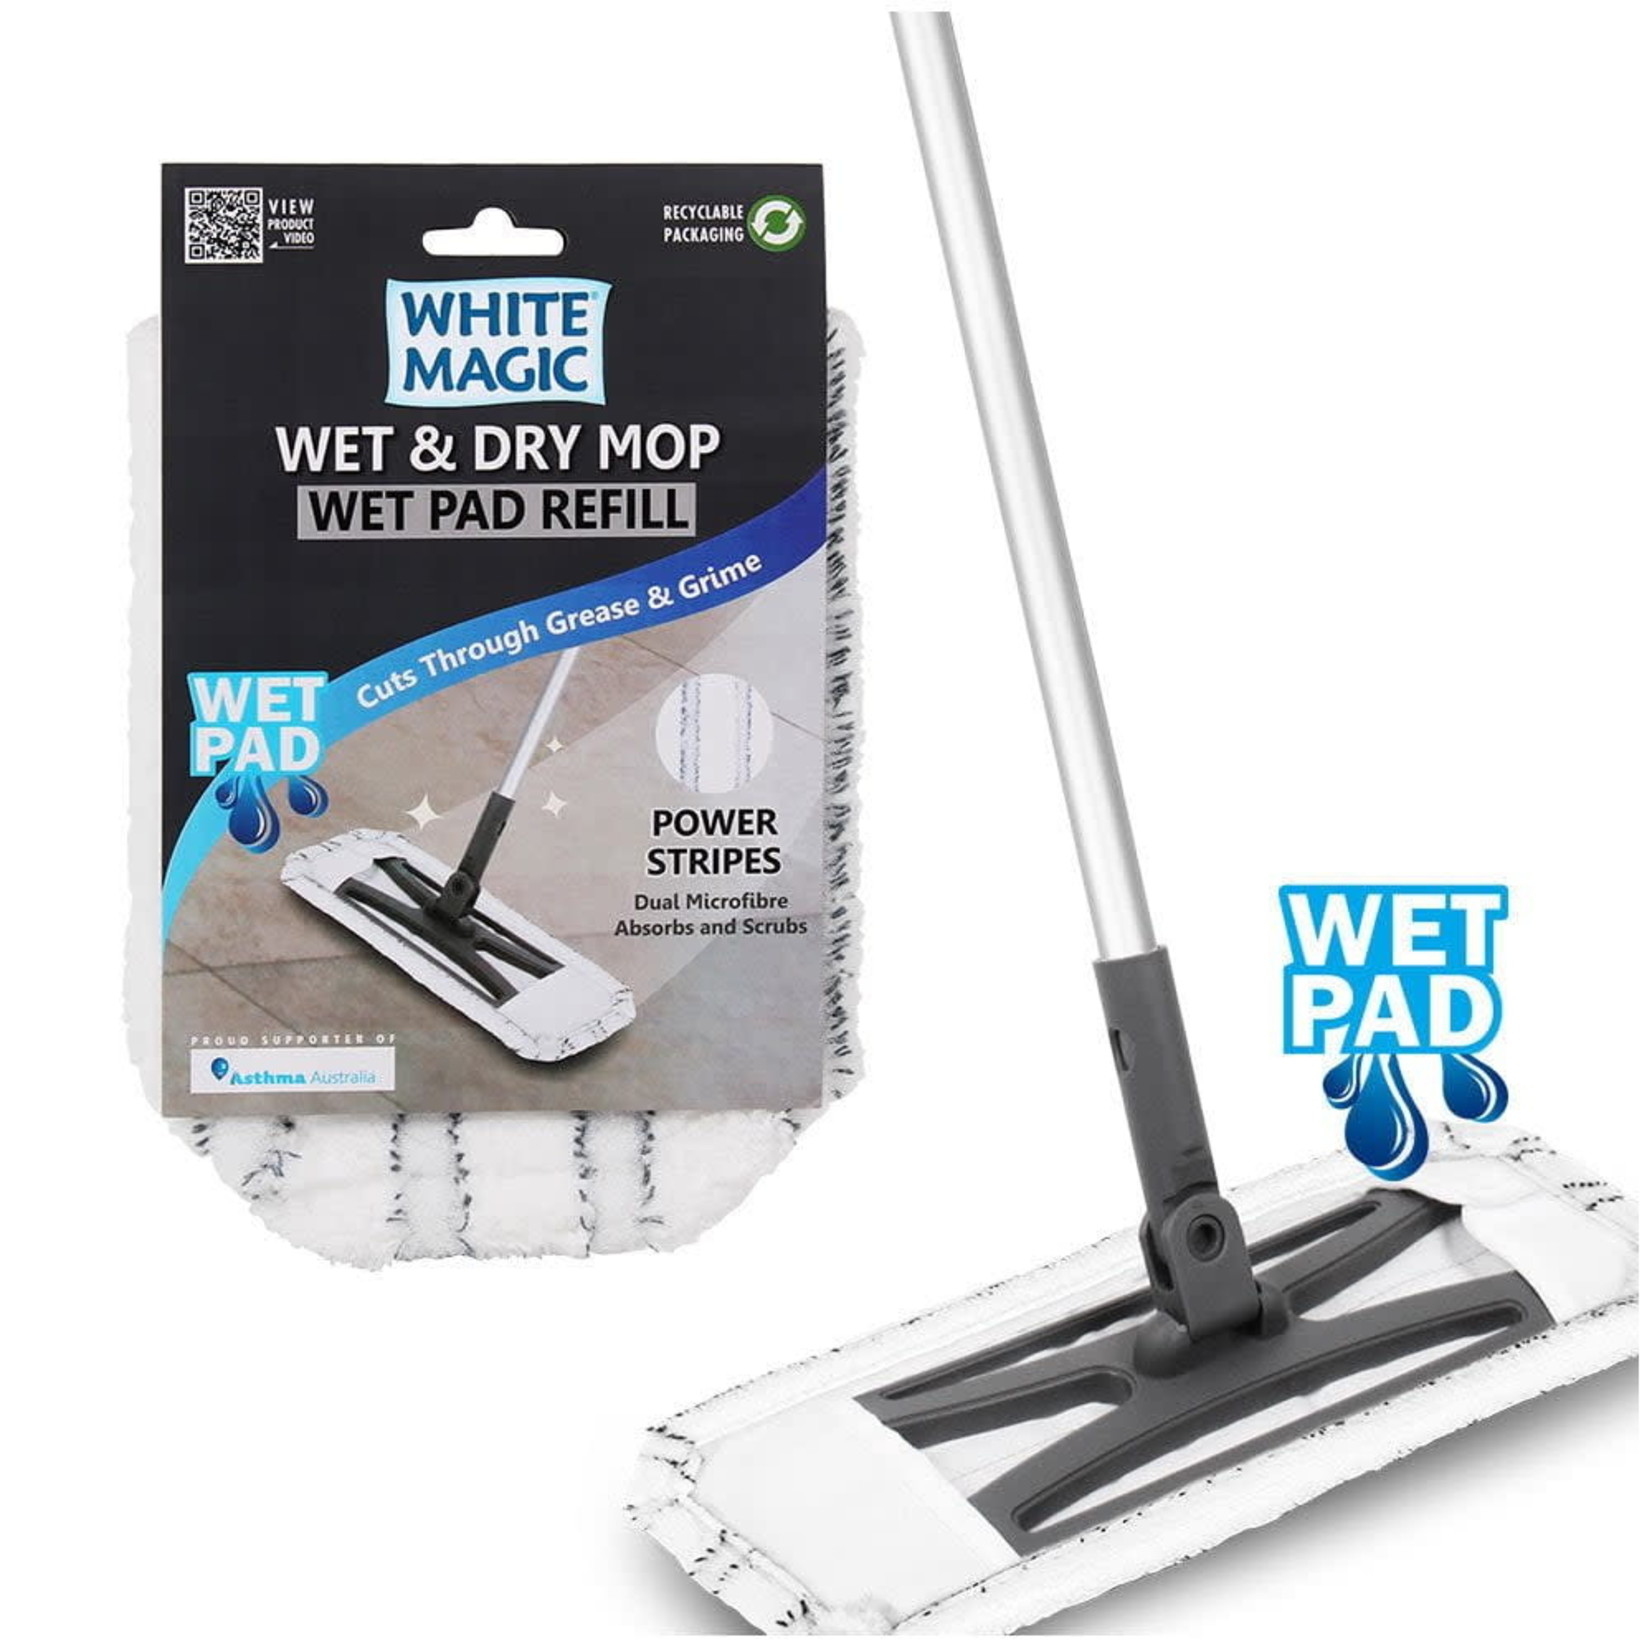 White Magic White Magic Wet & Dry Mop - Wet Pad Refill